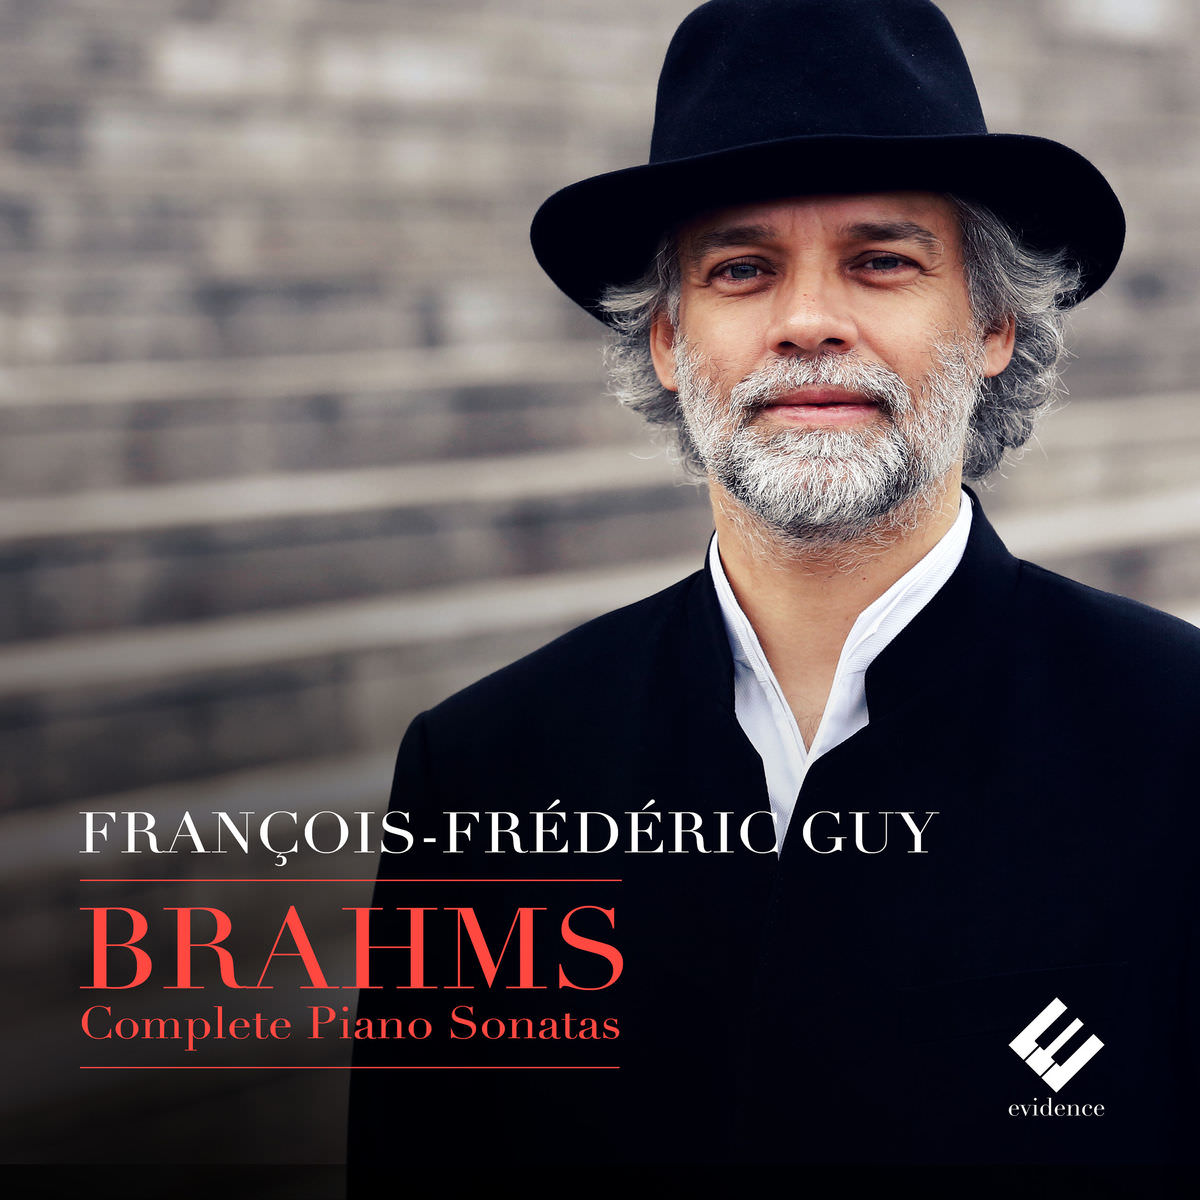 Francois-Frederic Guy - Brahms: Complete Piano Sonatas (2016) [Qobuz FLAC 24bit/48kHz]